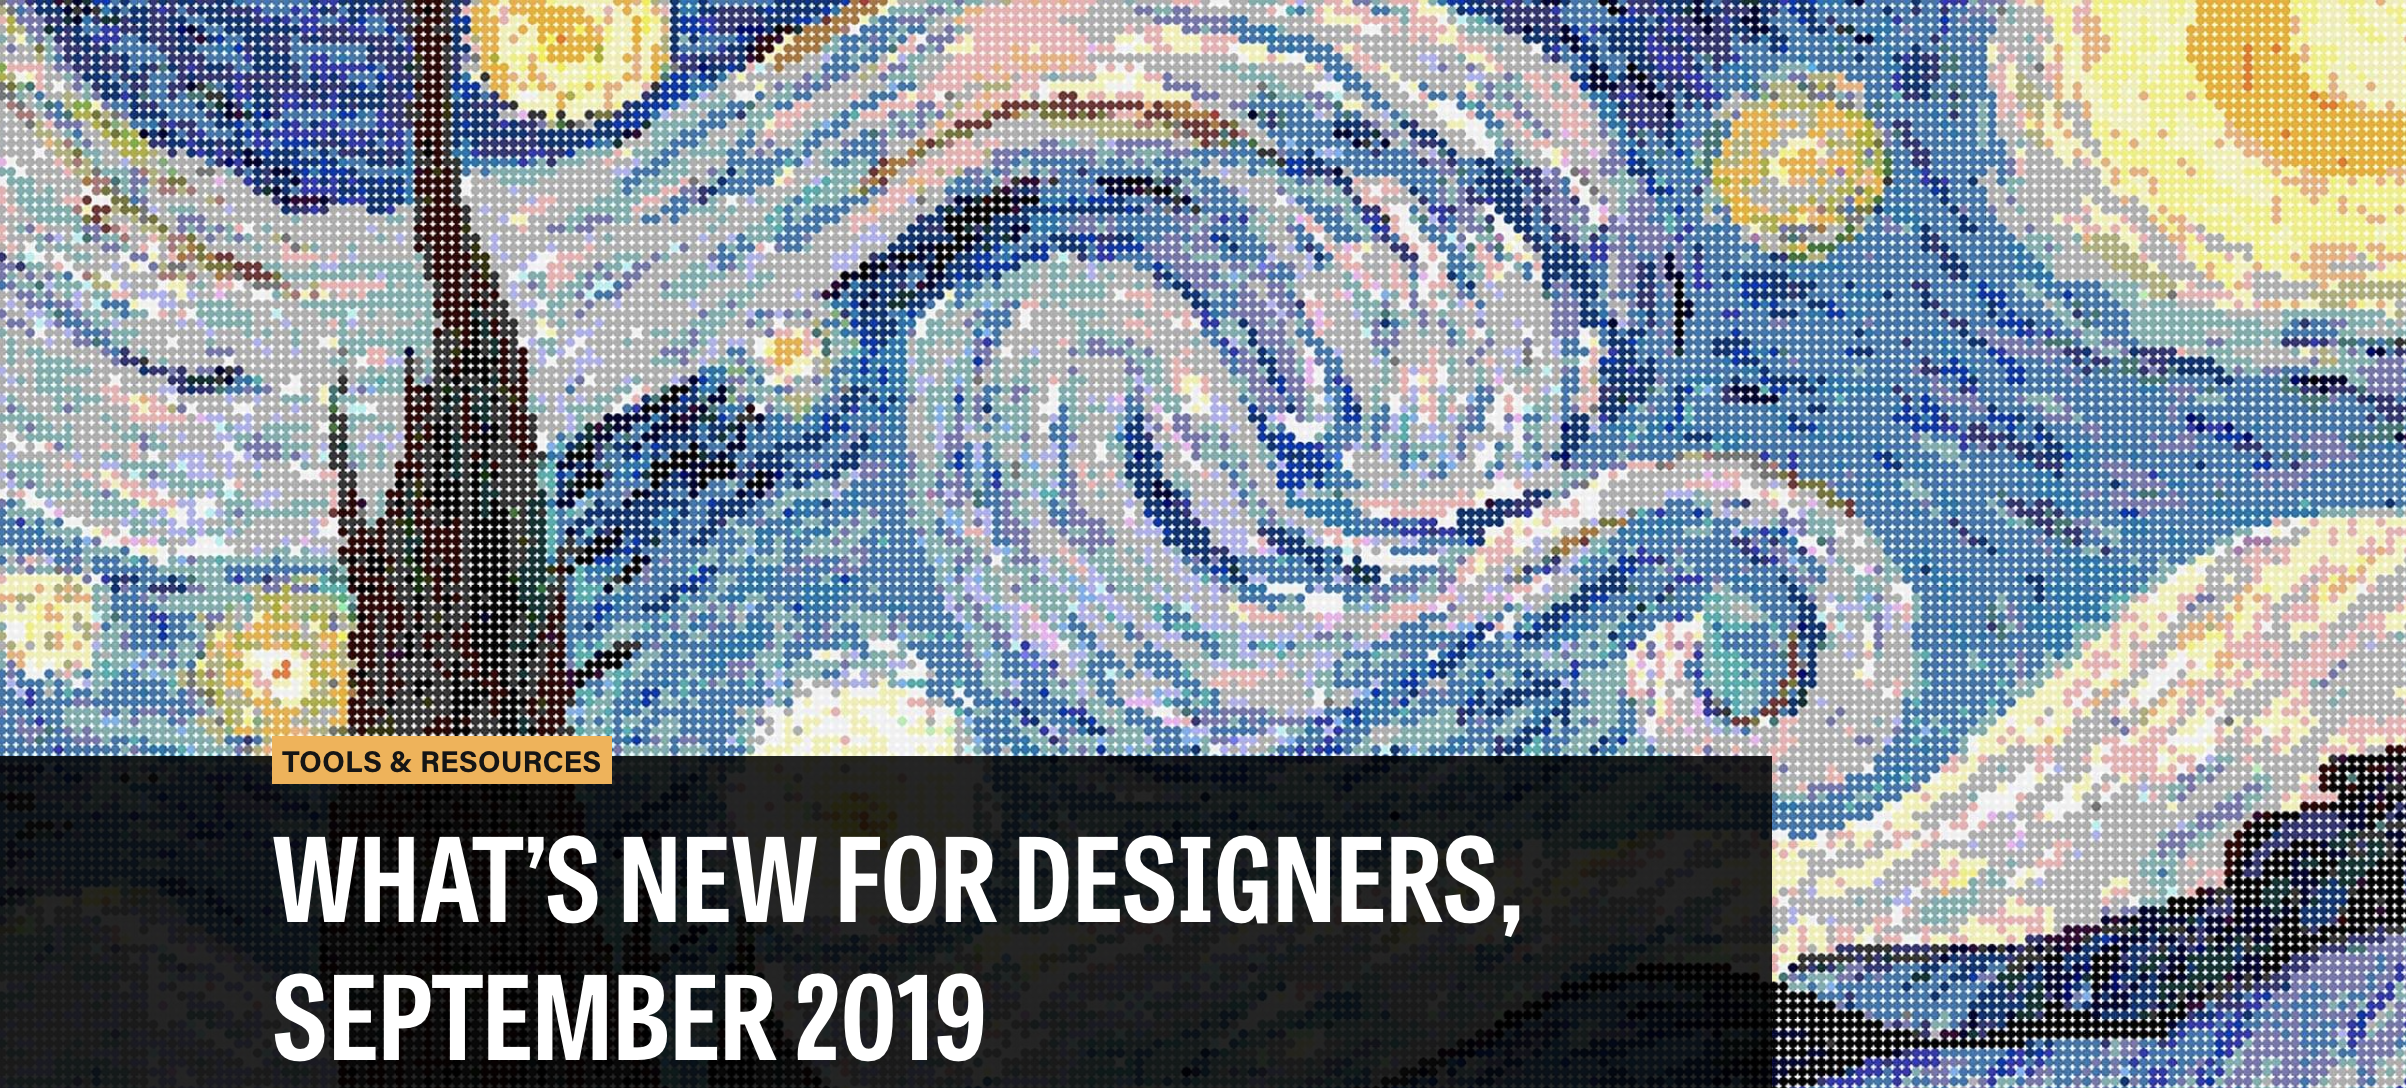 What's new for designers, September 2019